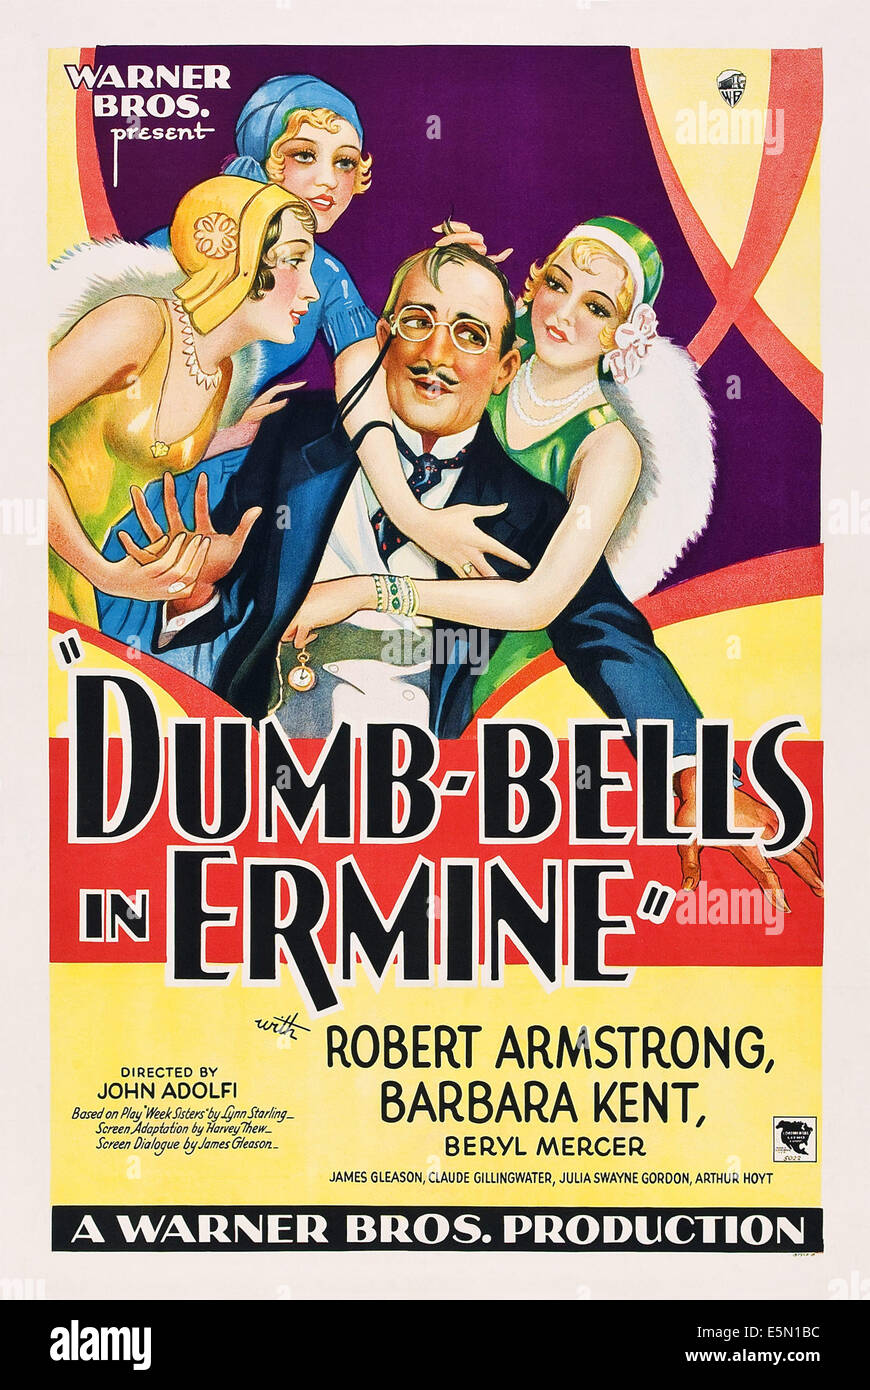 DUMB-BELLS IN ERMINE, (aka DUMBBELLS IN ERMINE), center: Robert Armstrong on poster art, 1930. Stock Photo